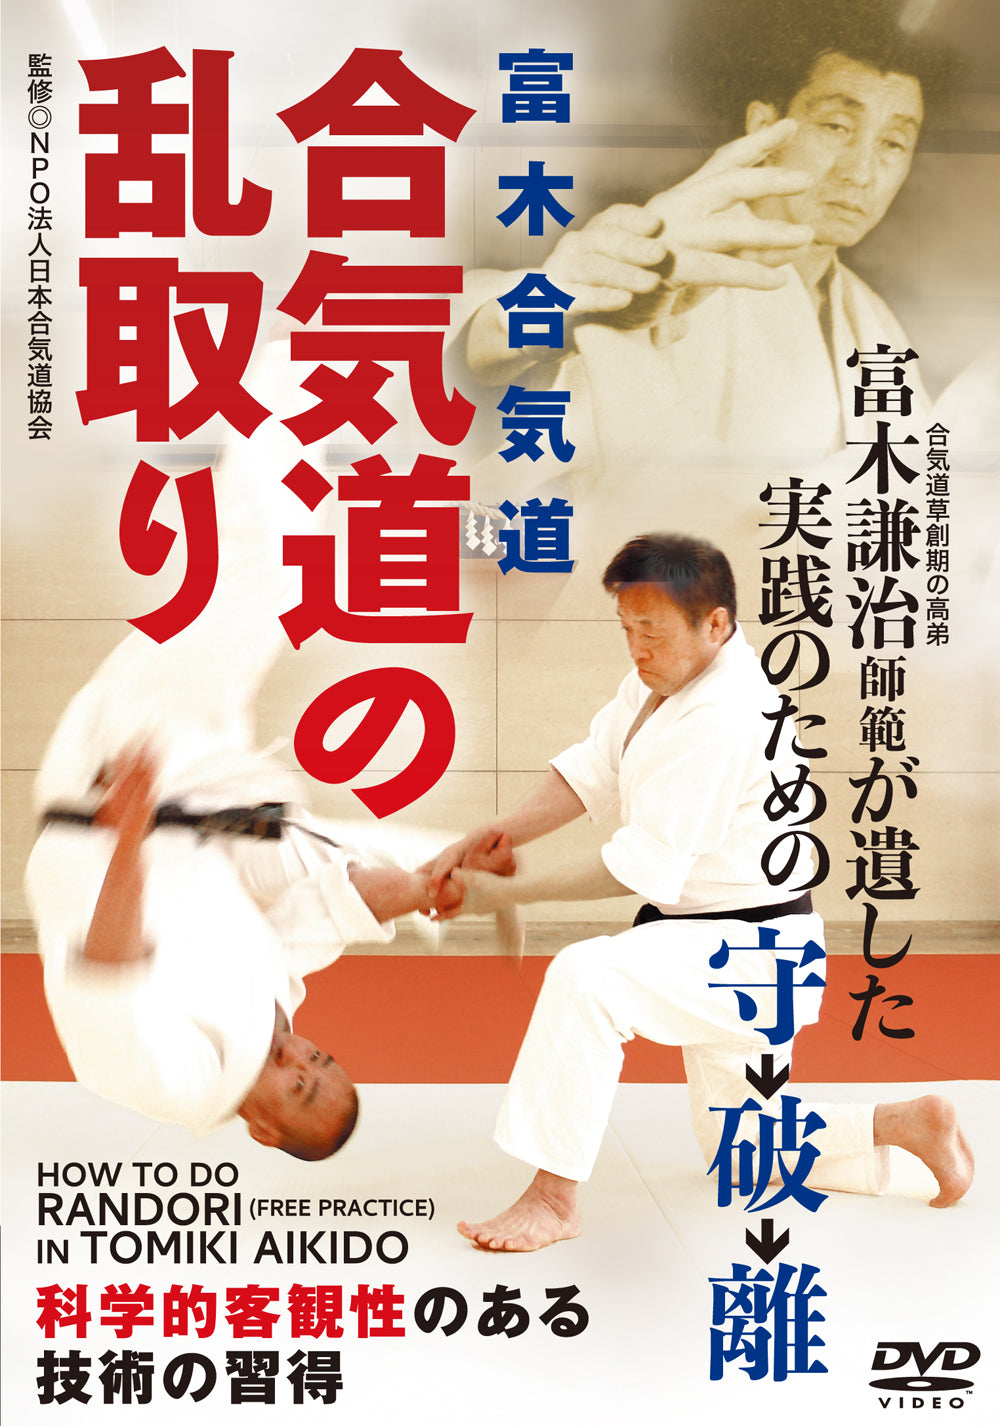 How to Do Randori in Tomiki Aikido DVD by Tadayuki Sato